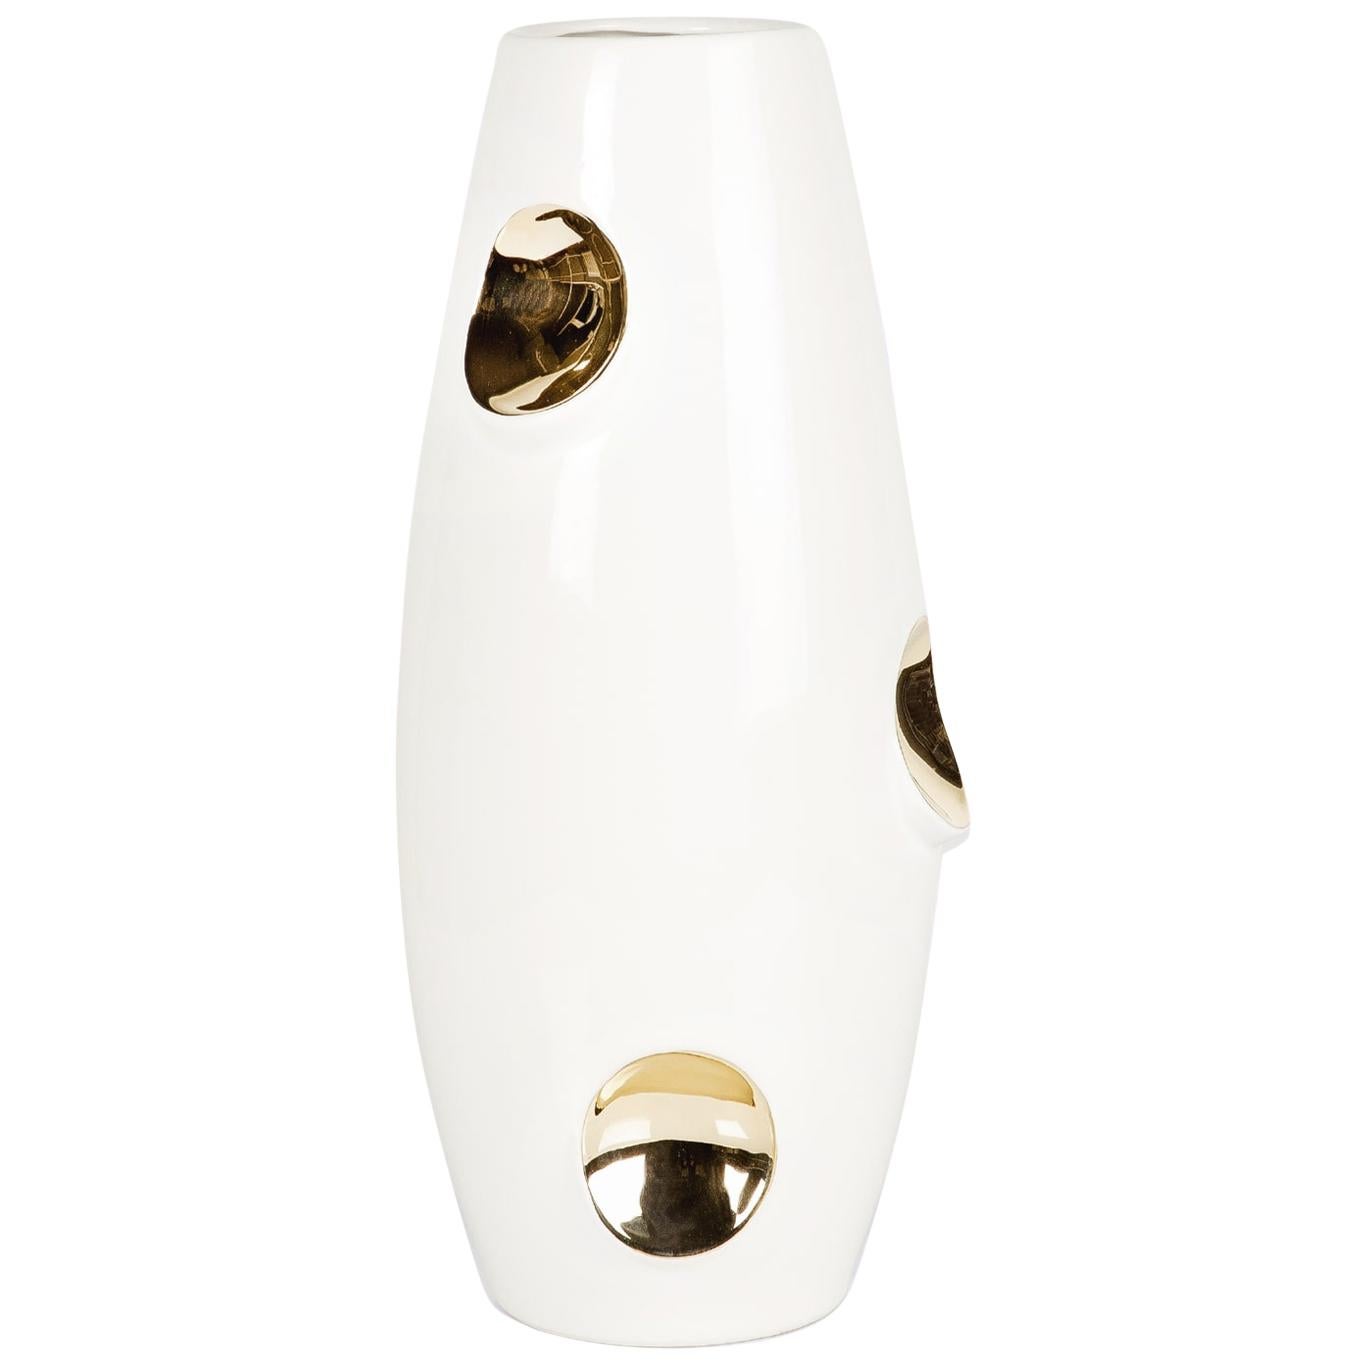 OKO Gold Ceramic Vase by Malwina Konopacka For Sale